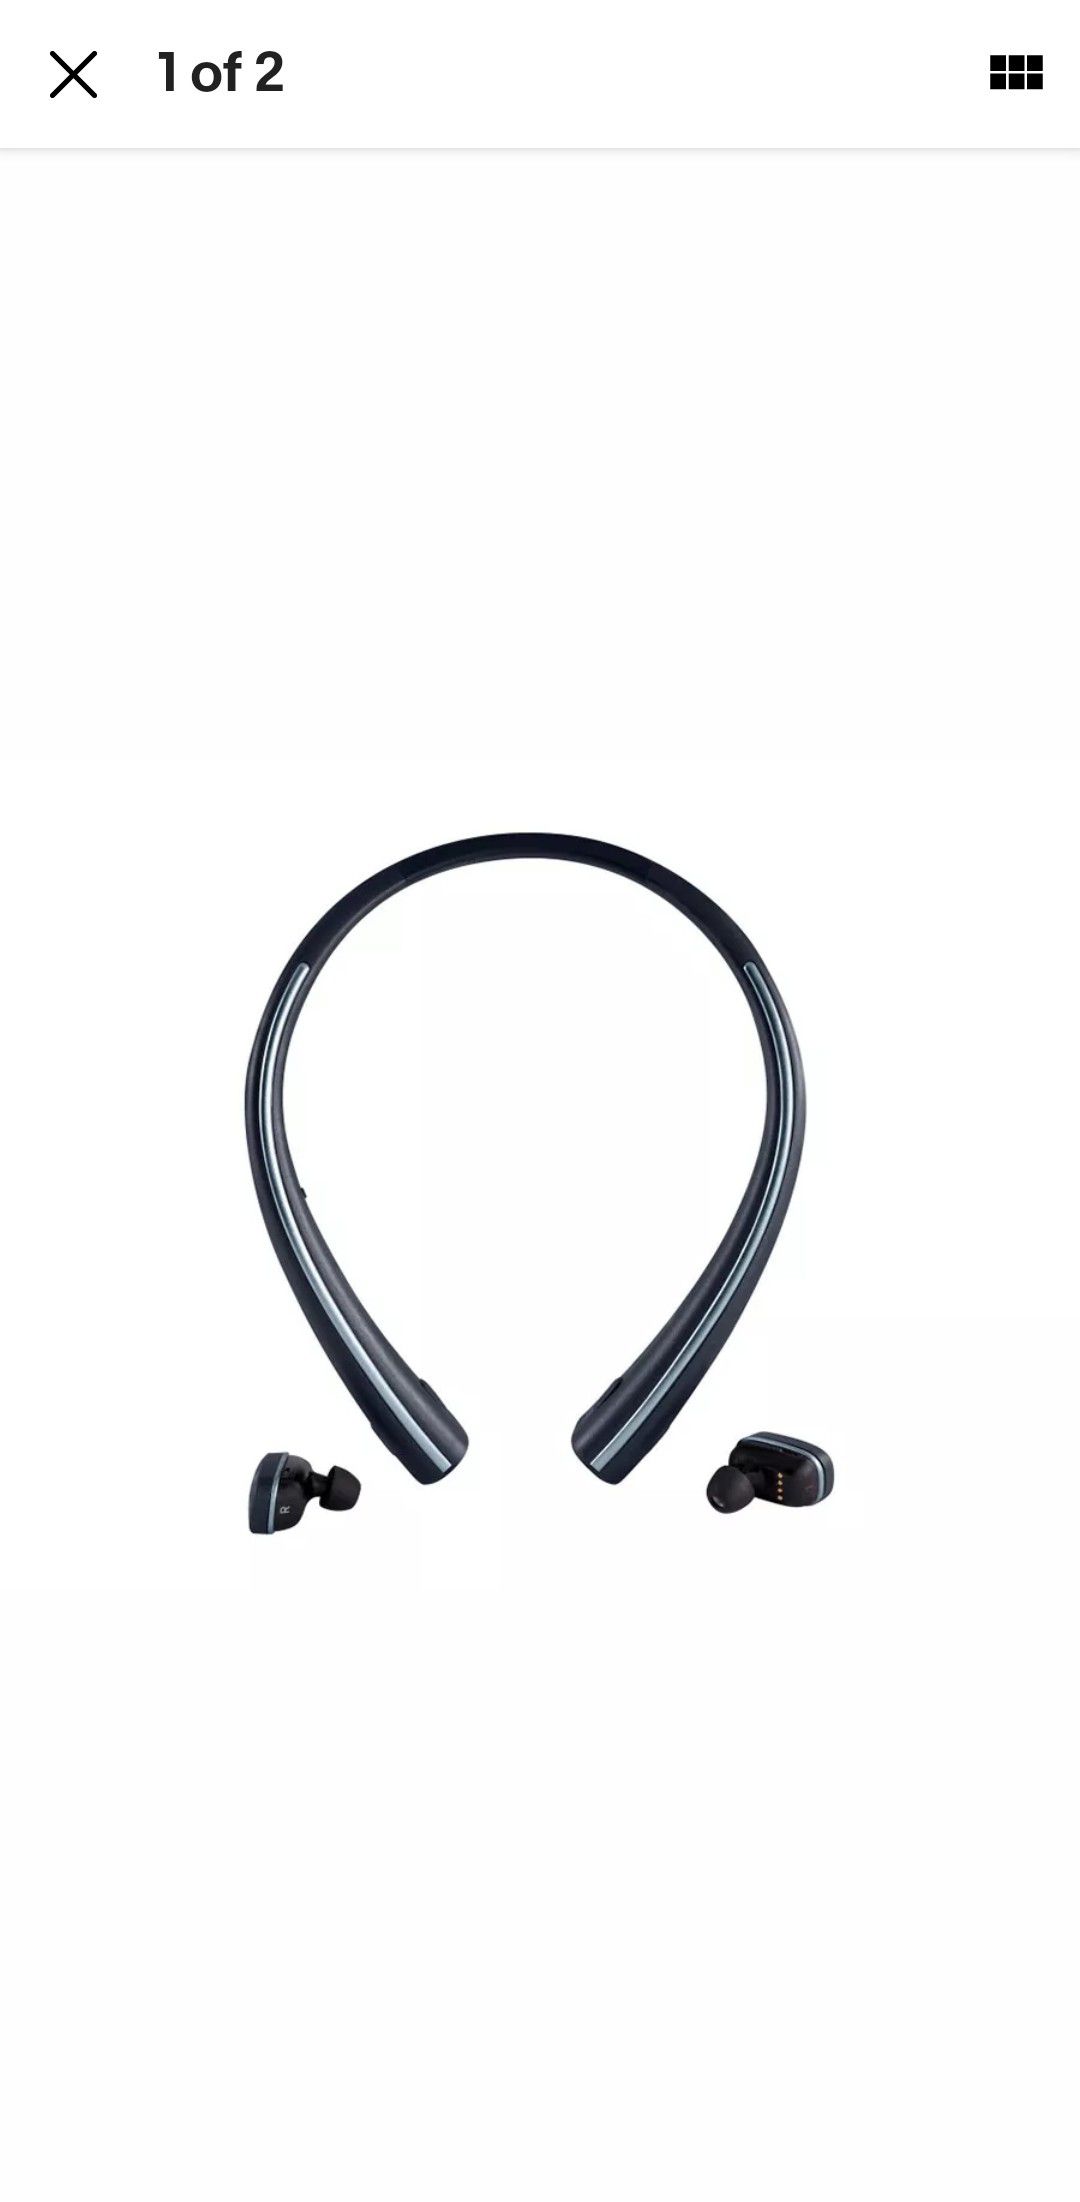 LG Tone Free HBS-F110 Bluetooth Wireless In-Ear Earbuds HEADSET